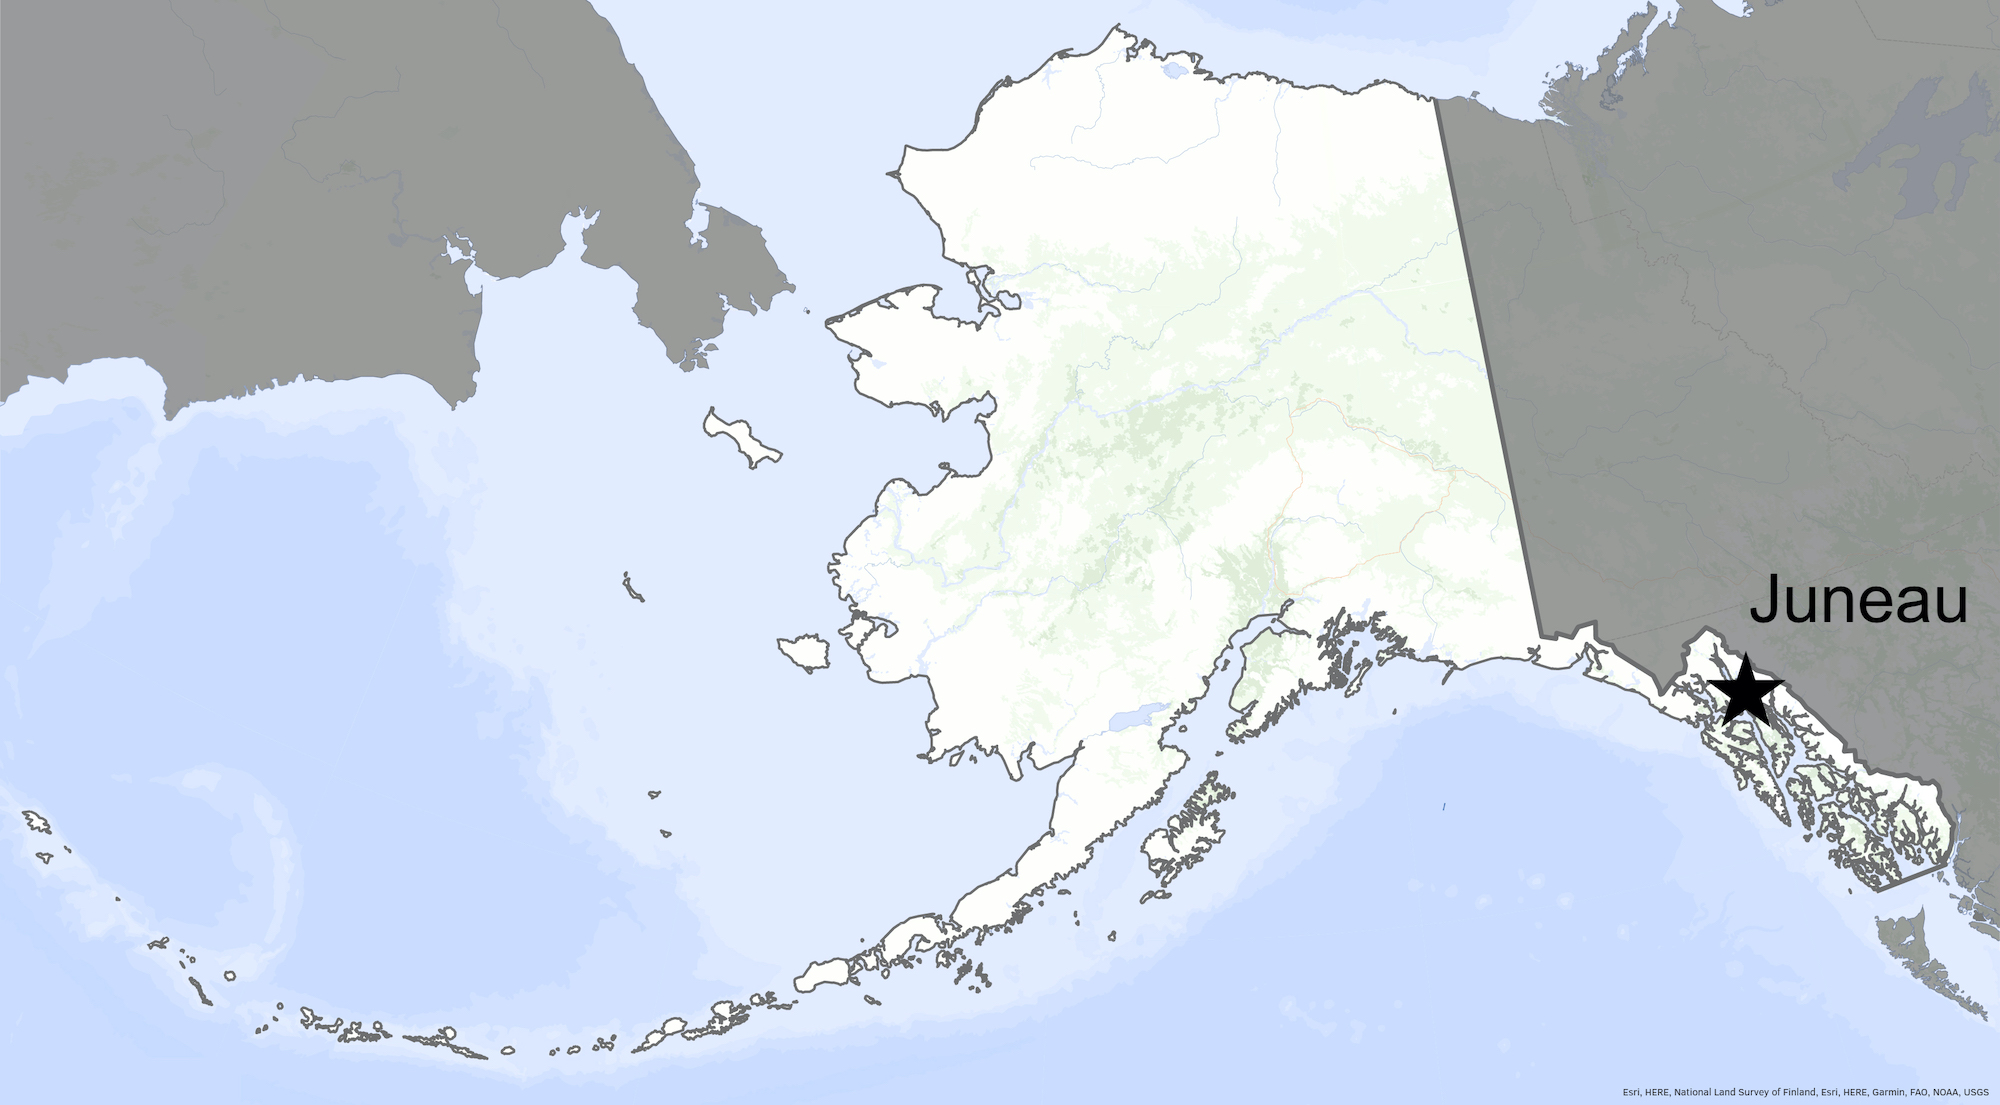 A map locates Juneau in Alaska's southeastern "panhandle."